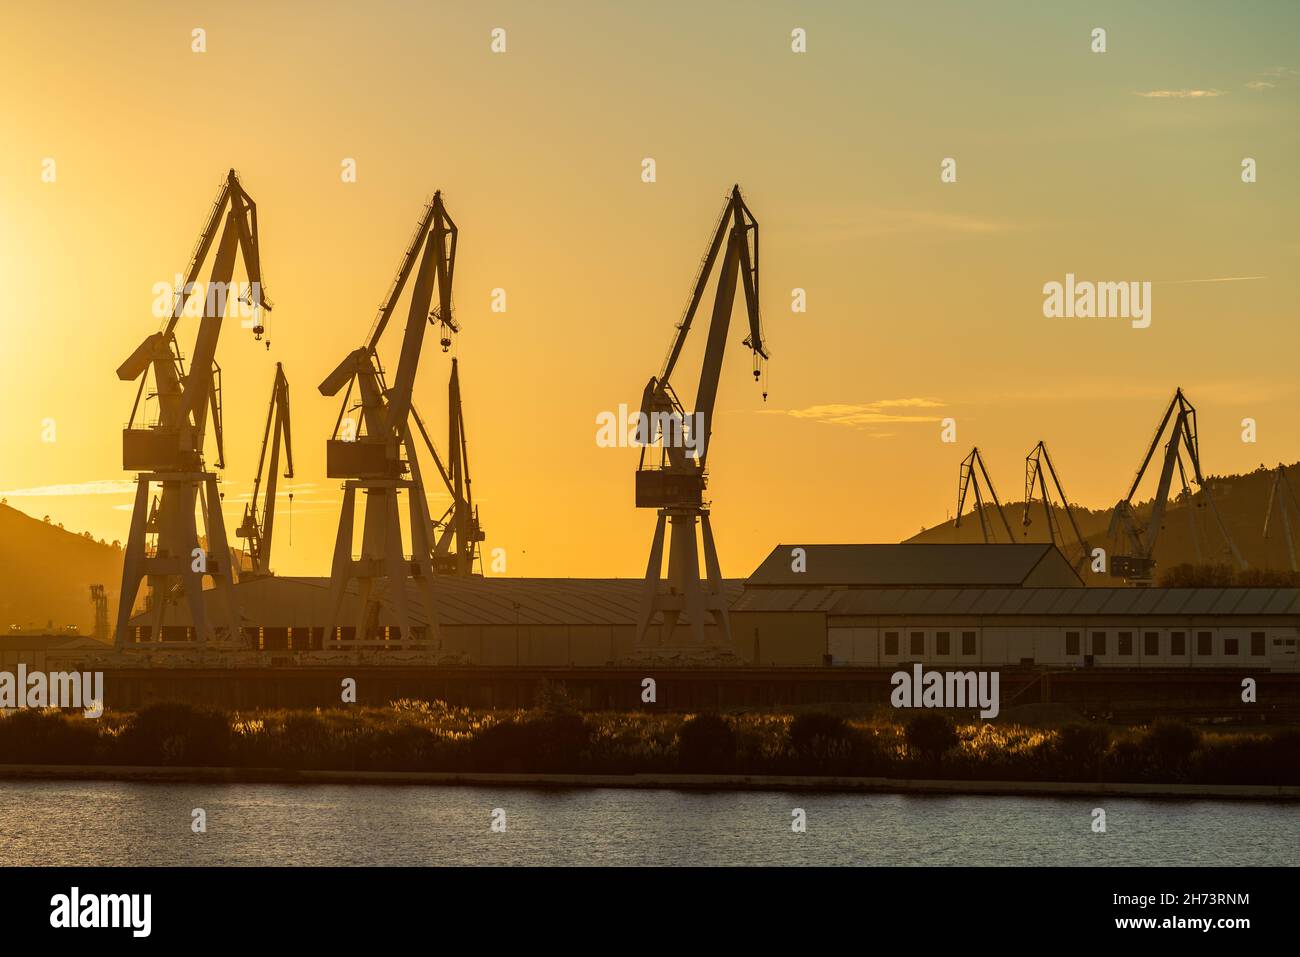 Port shipyard cranes against orange sky Stock Photo